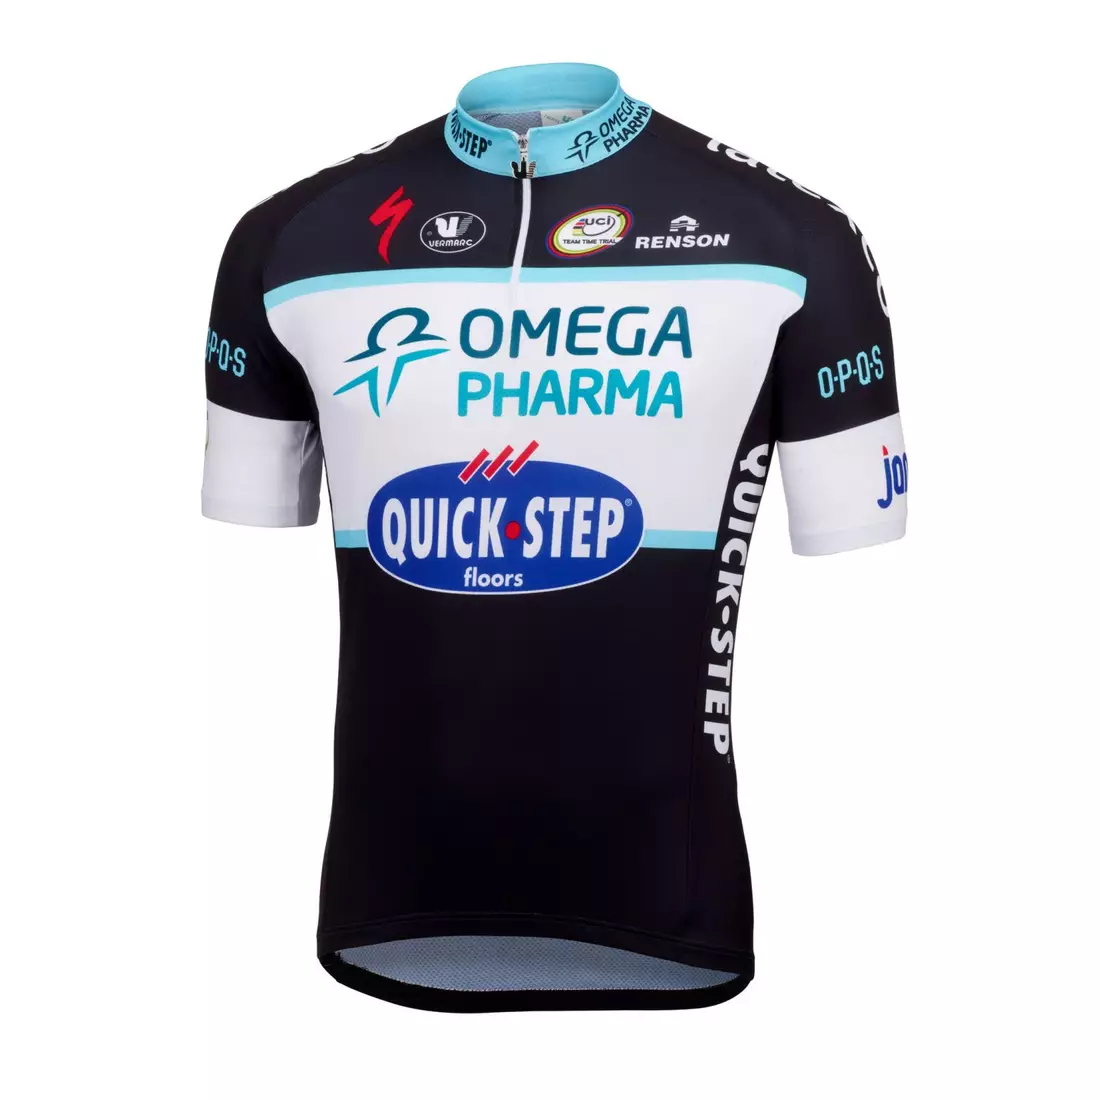 VERMARC - OMEGA PHARMA 2014 cycling jersey, short zipper